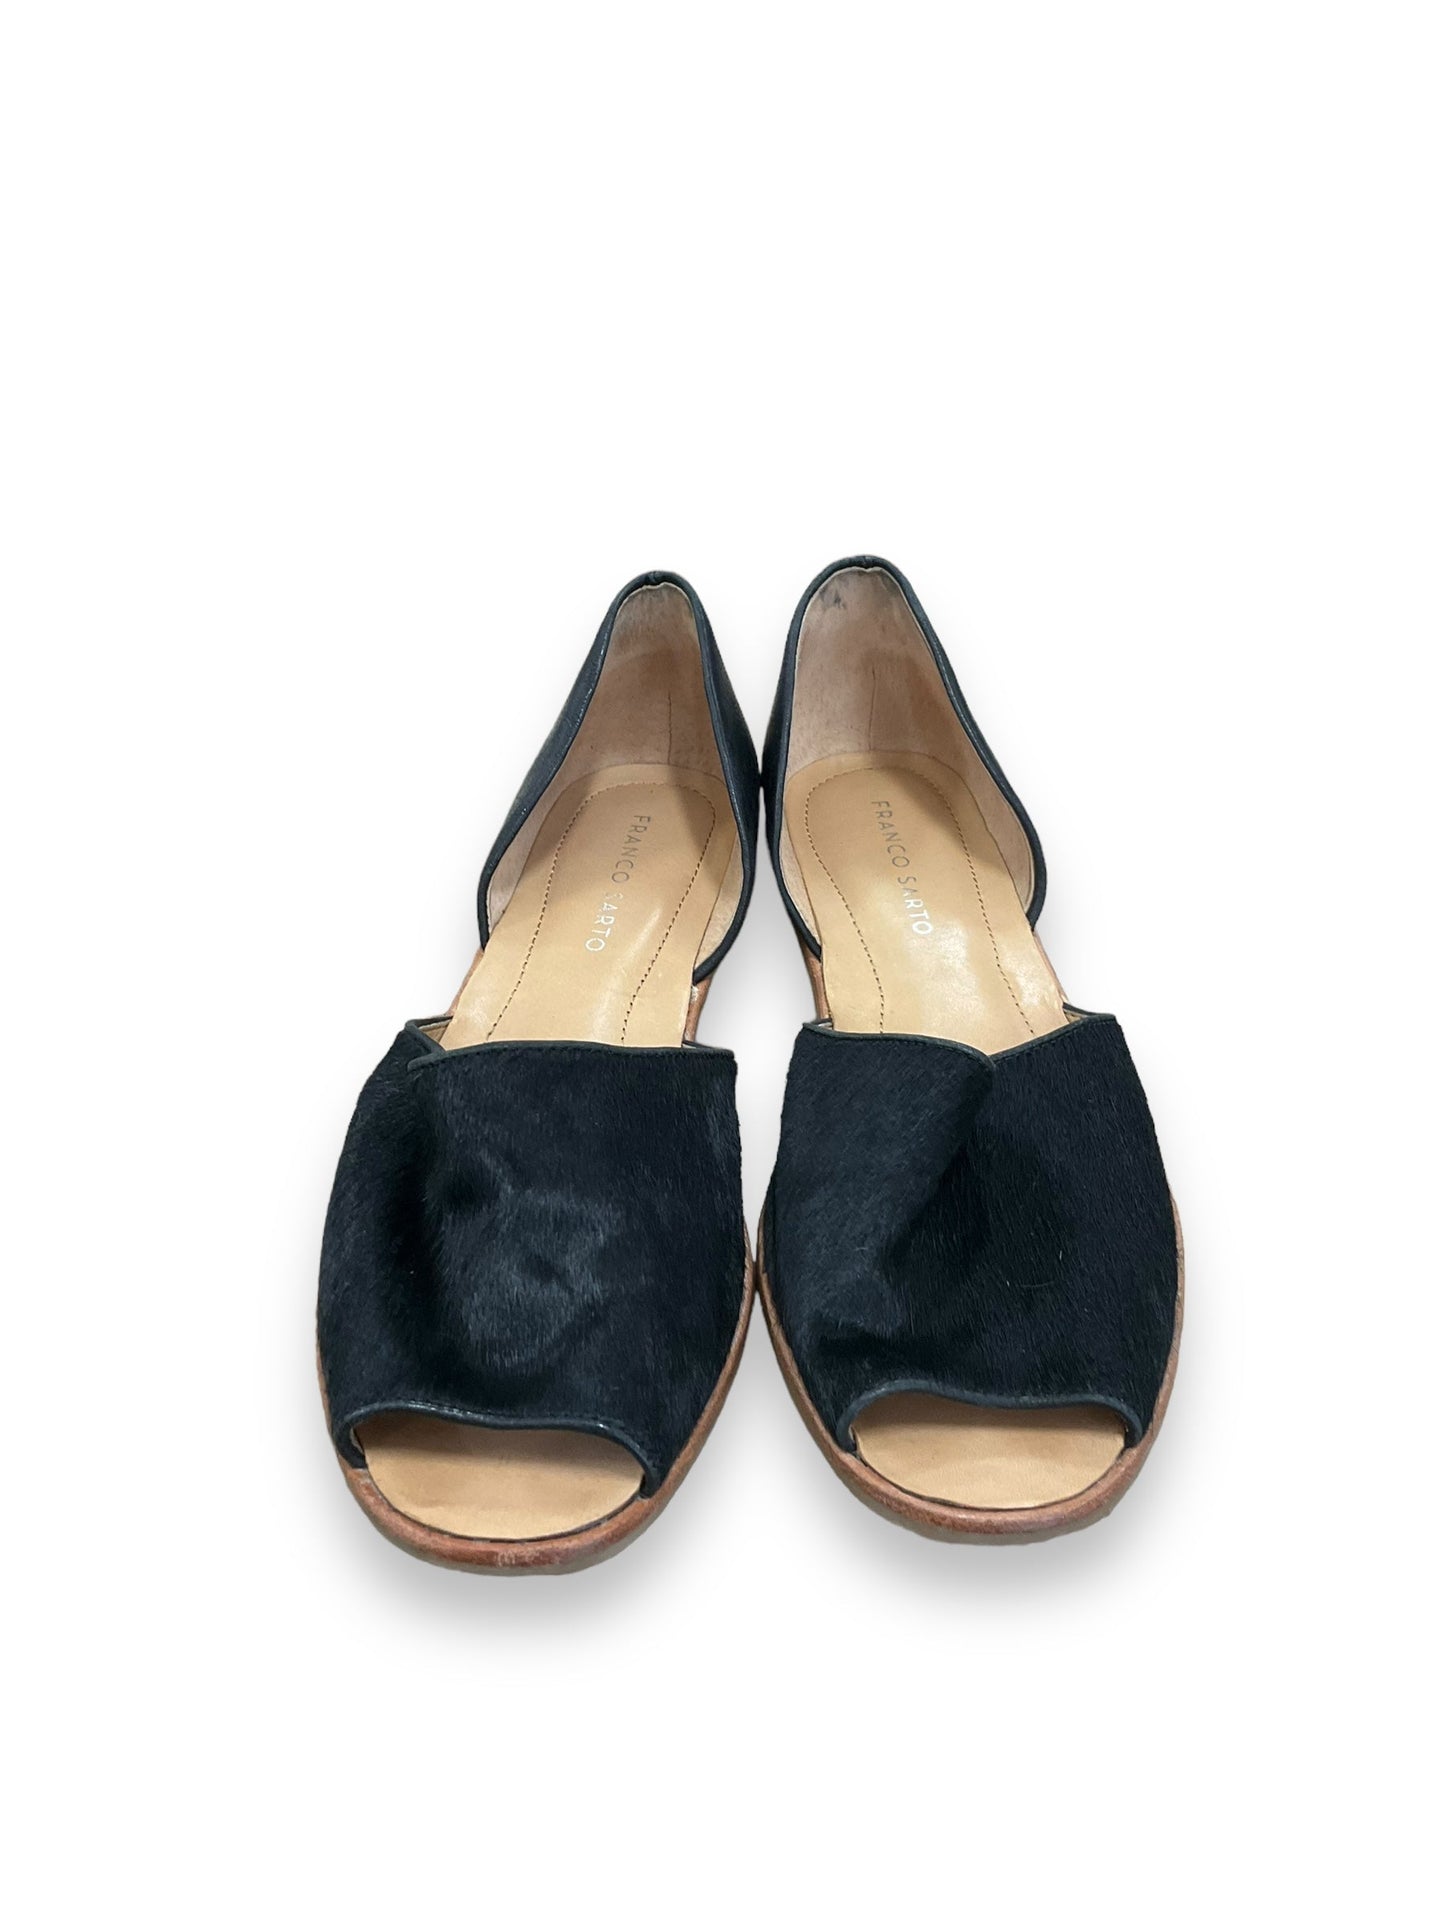 Black Shoes Flats Franco Sarto, Size 9